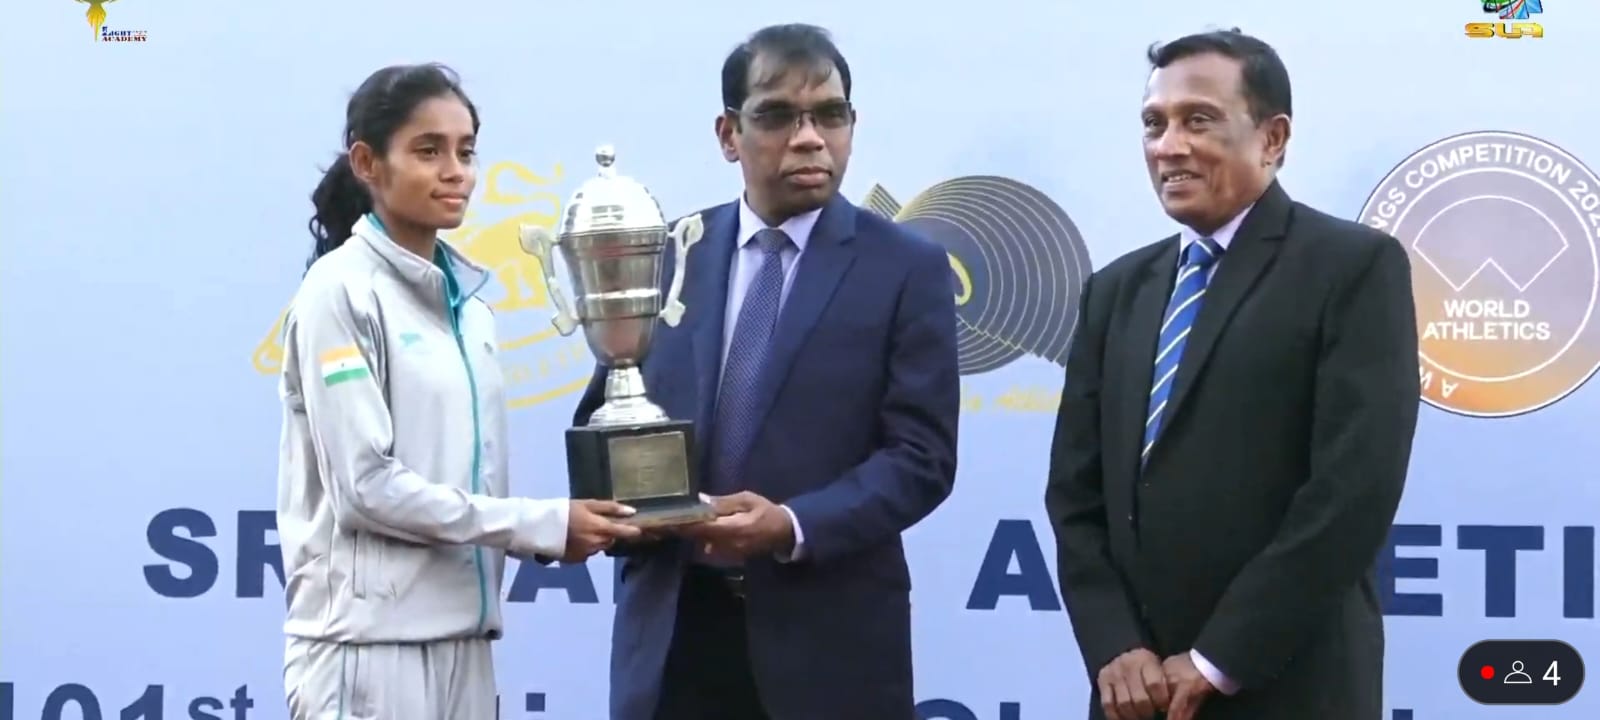 Raiganj girl Sonia Baishya wins gold